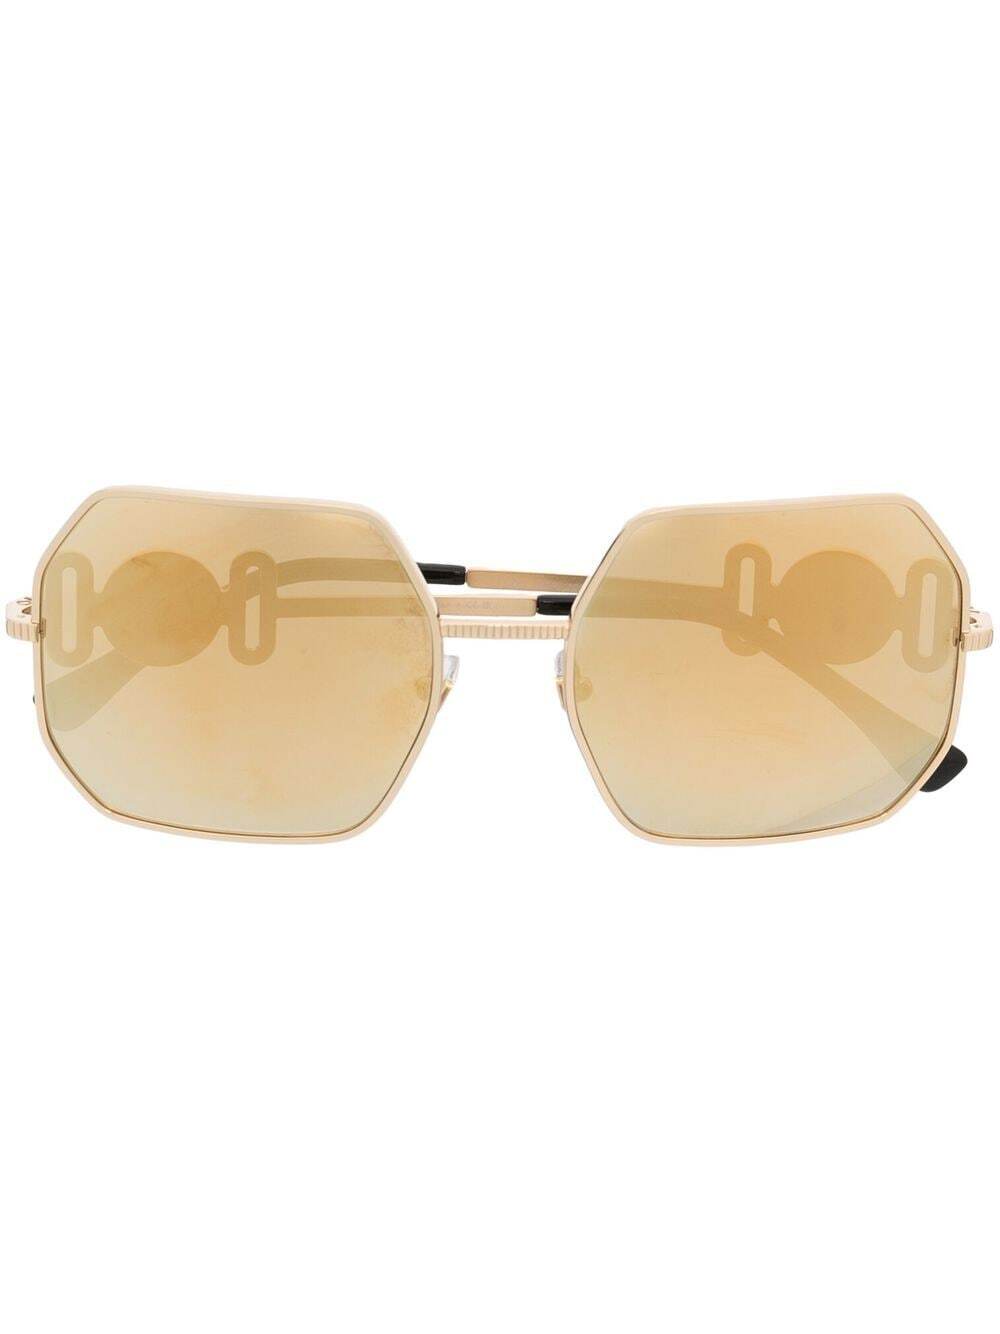 VERSACE EYEWEAR VE2248 Medusa-arm sunglasses - Gold